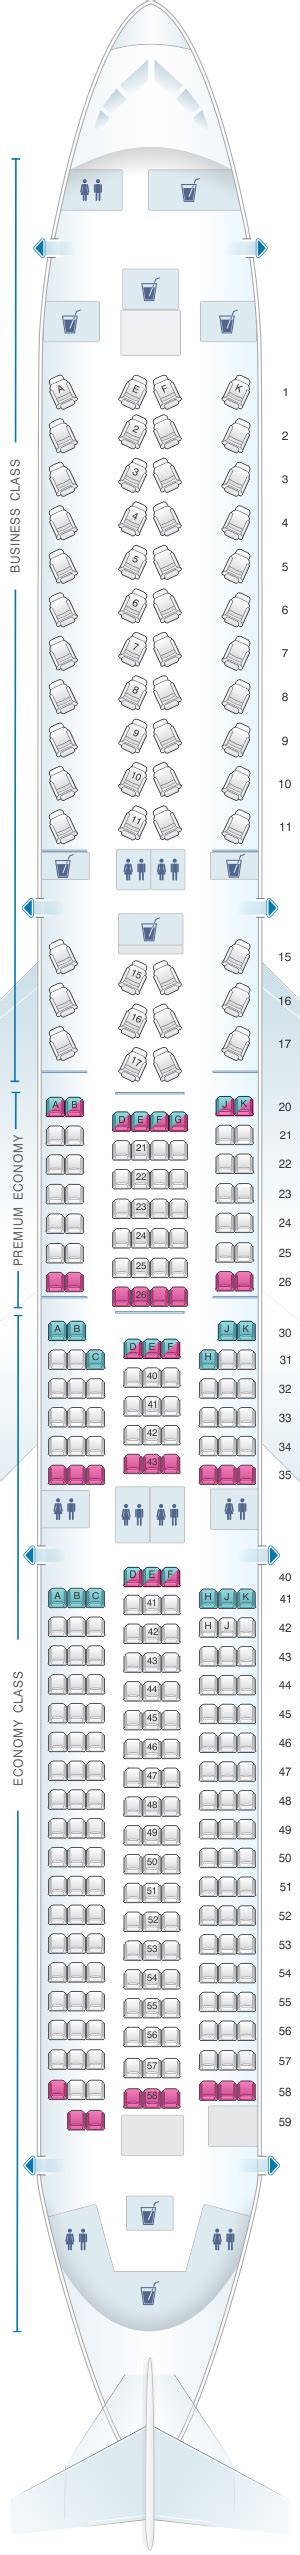 Seat Map British Airways Airbus A Domestic Layout Seatmaestro